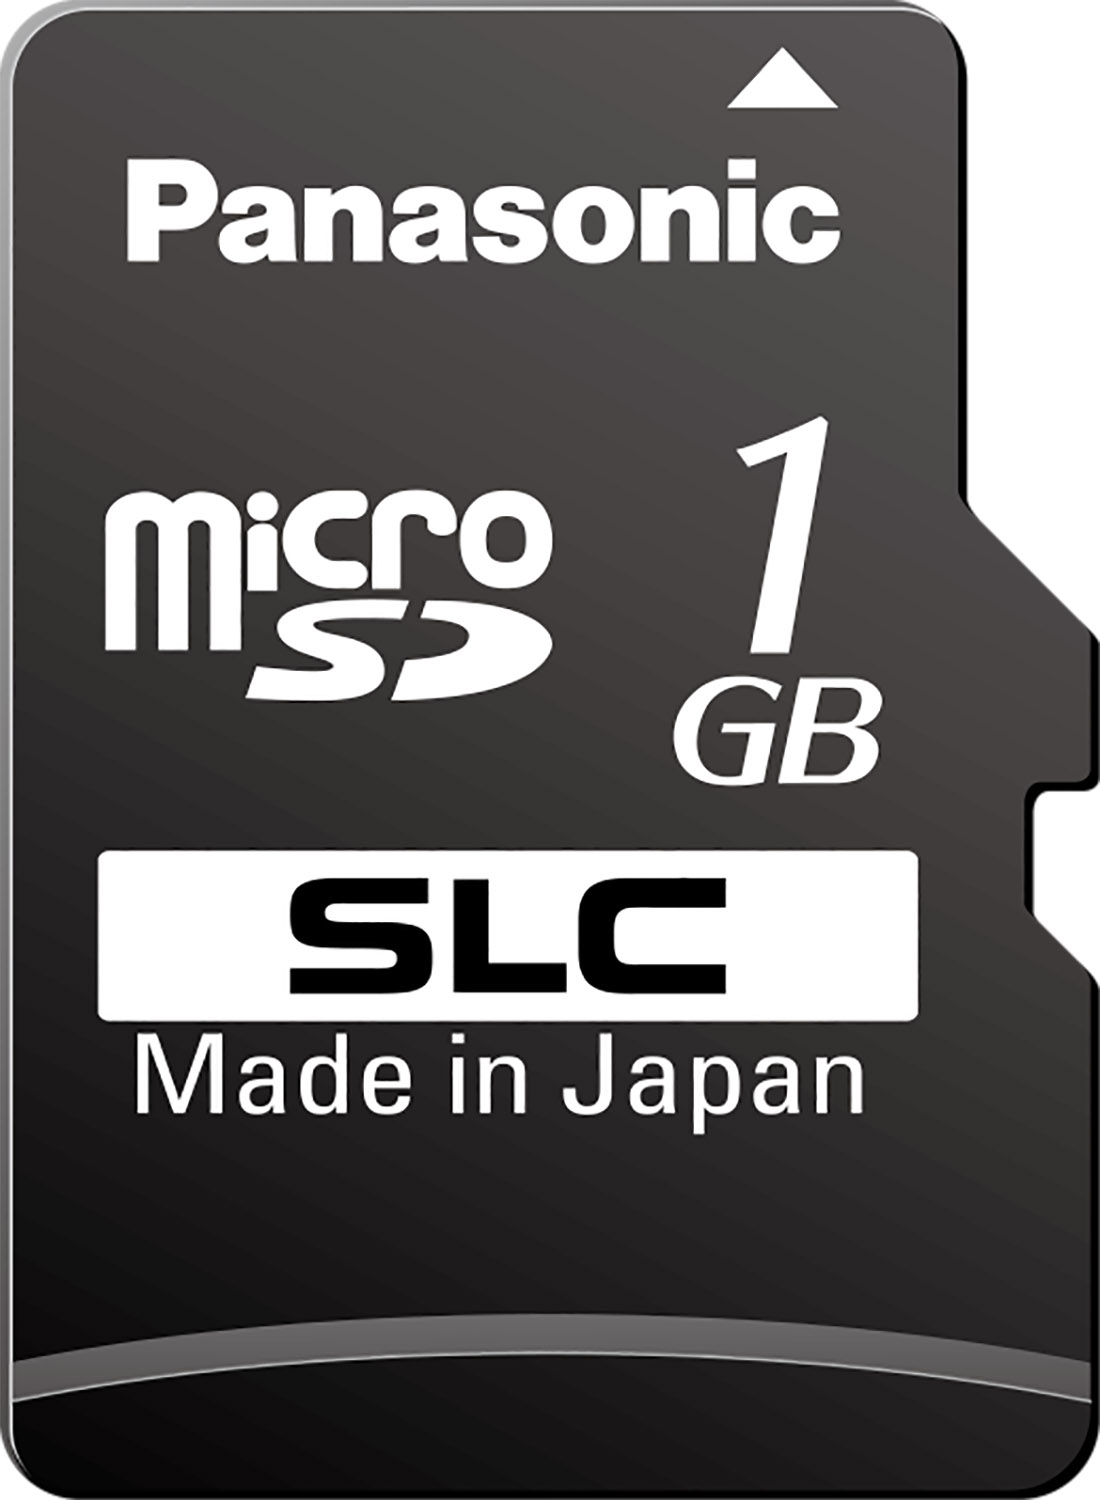 RP-SMSC01DA1 by Panasonic